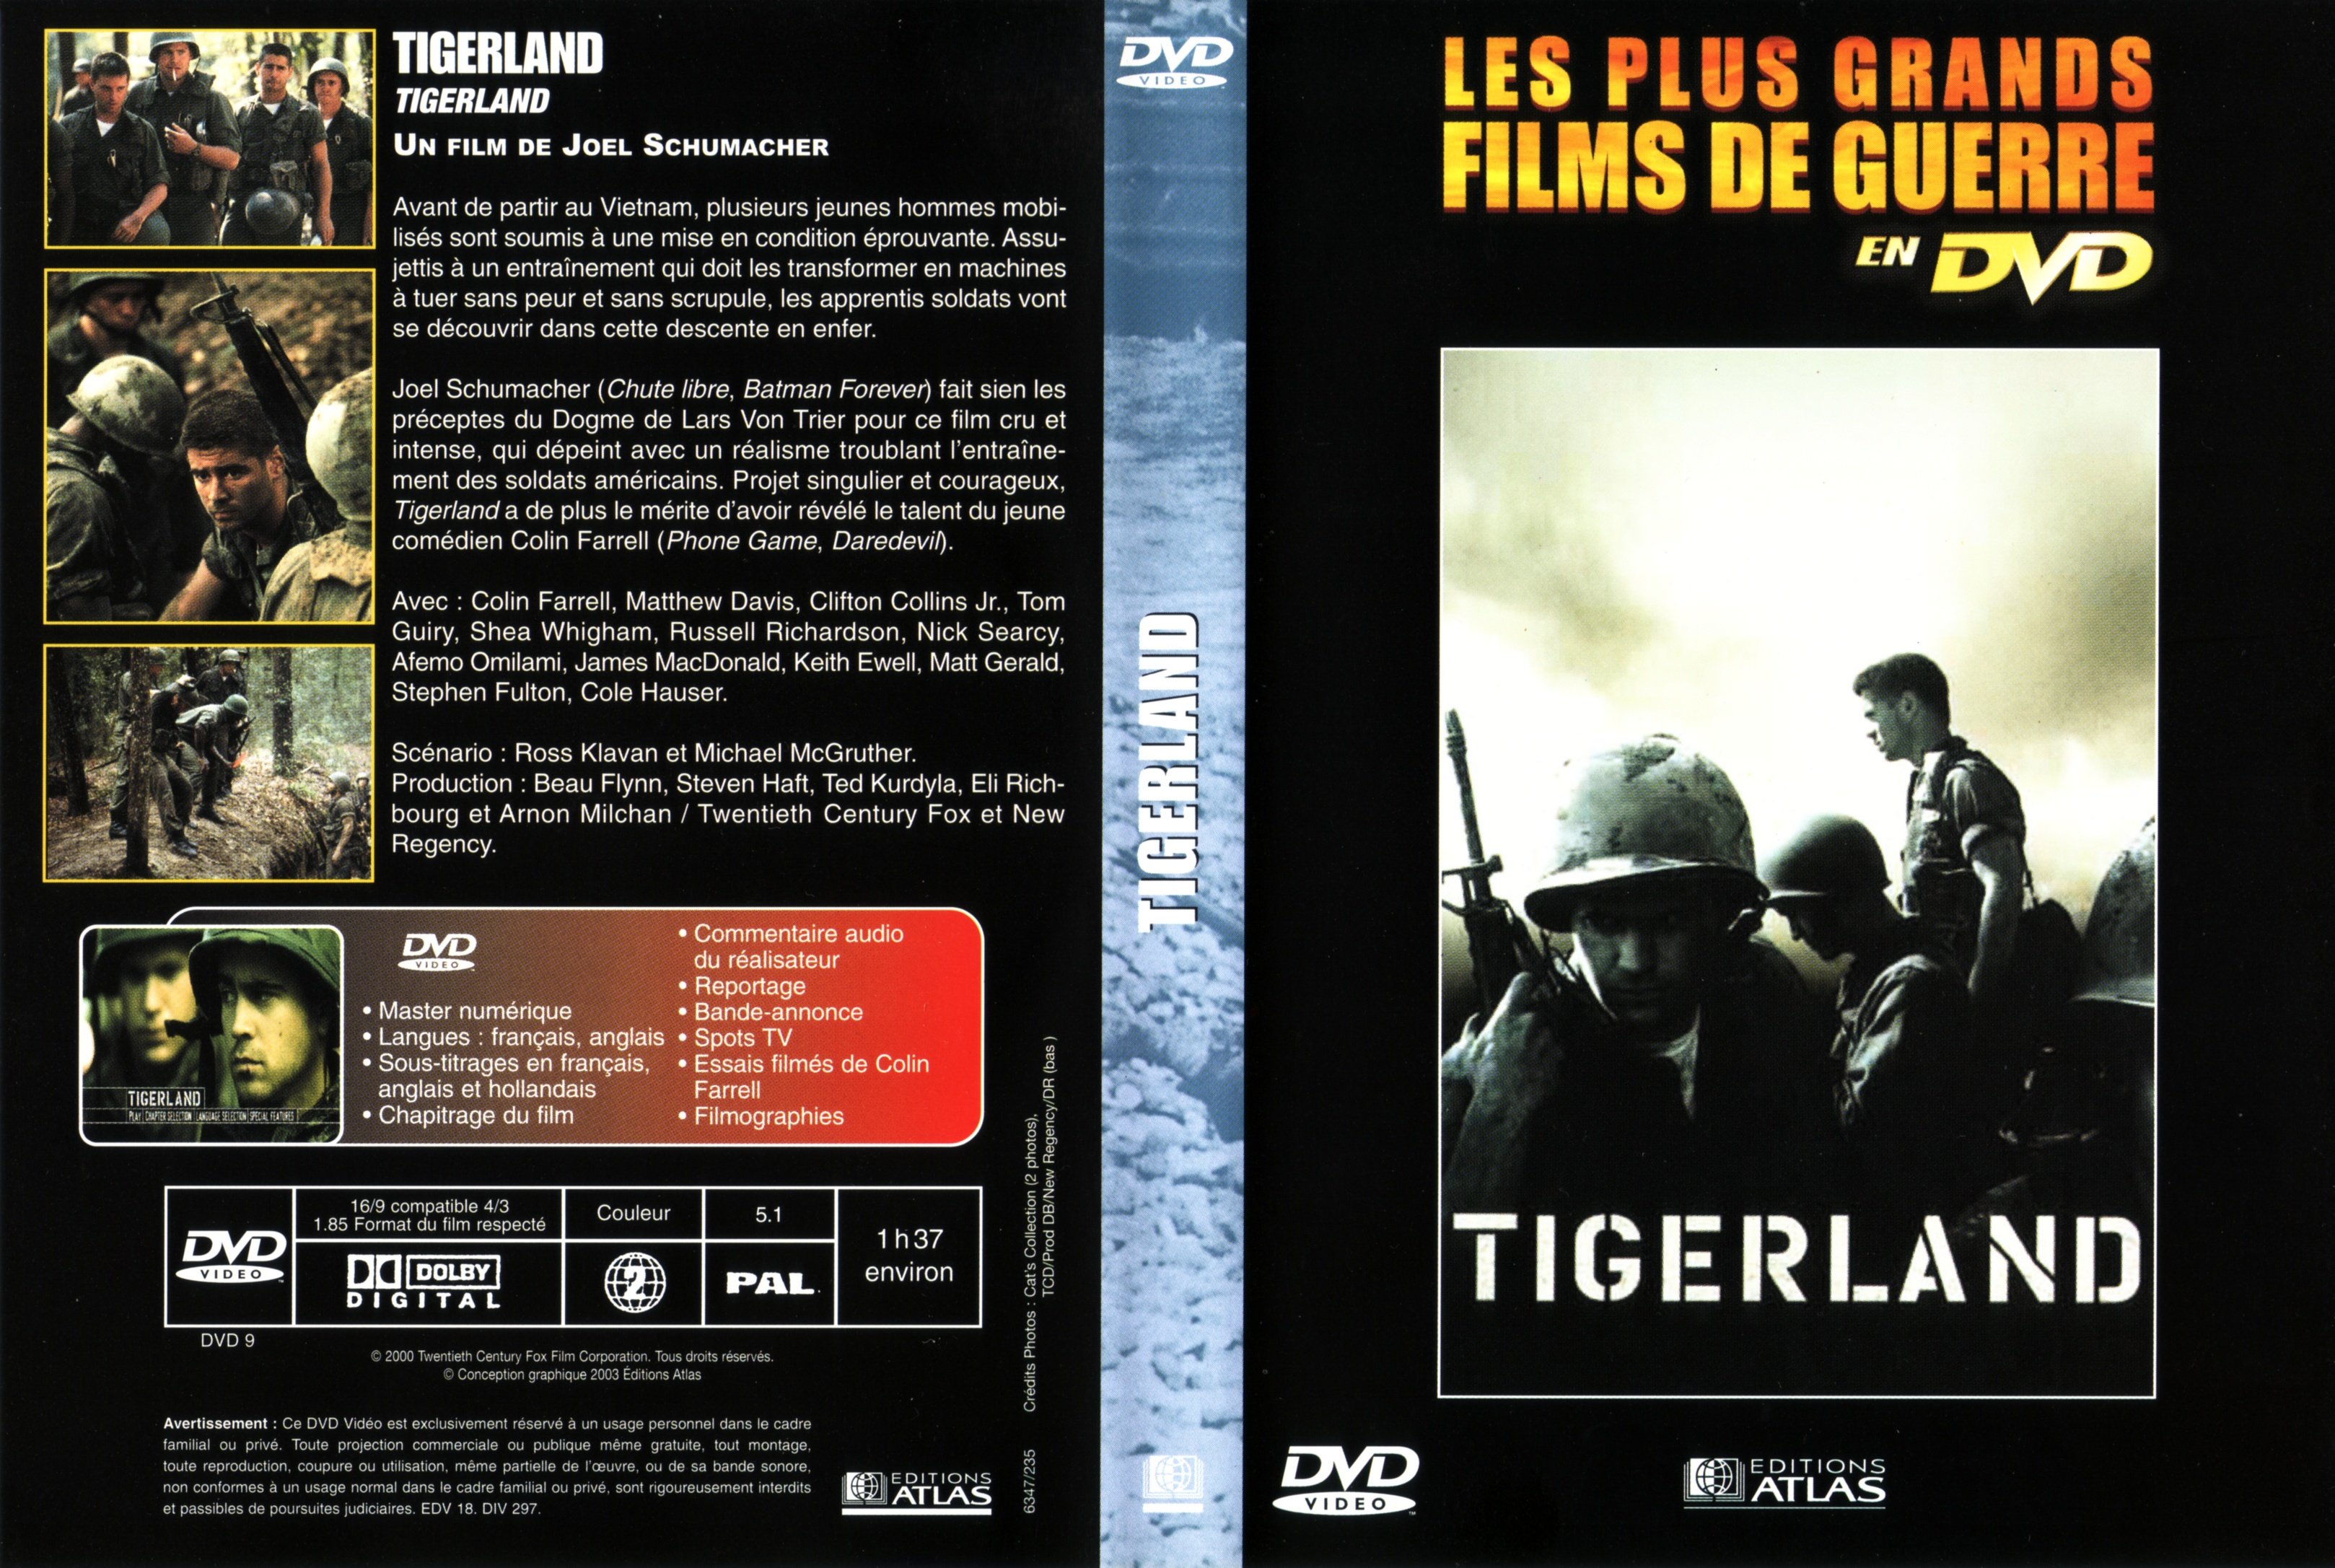 Jaquette DVD Tigerland